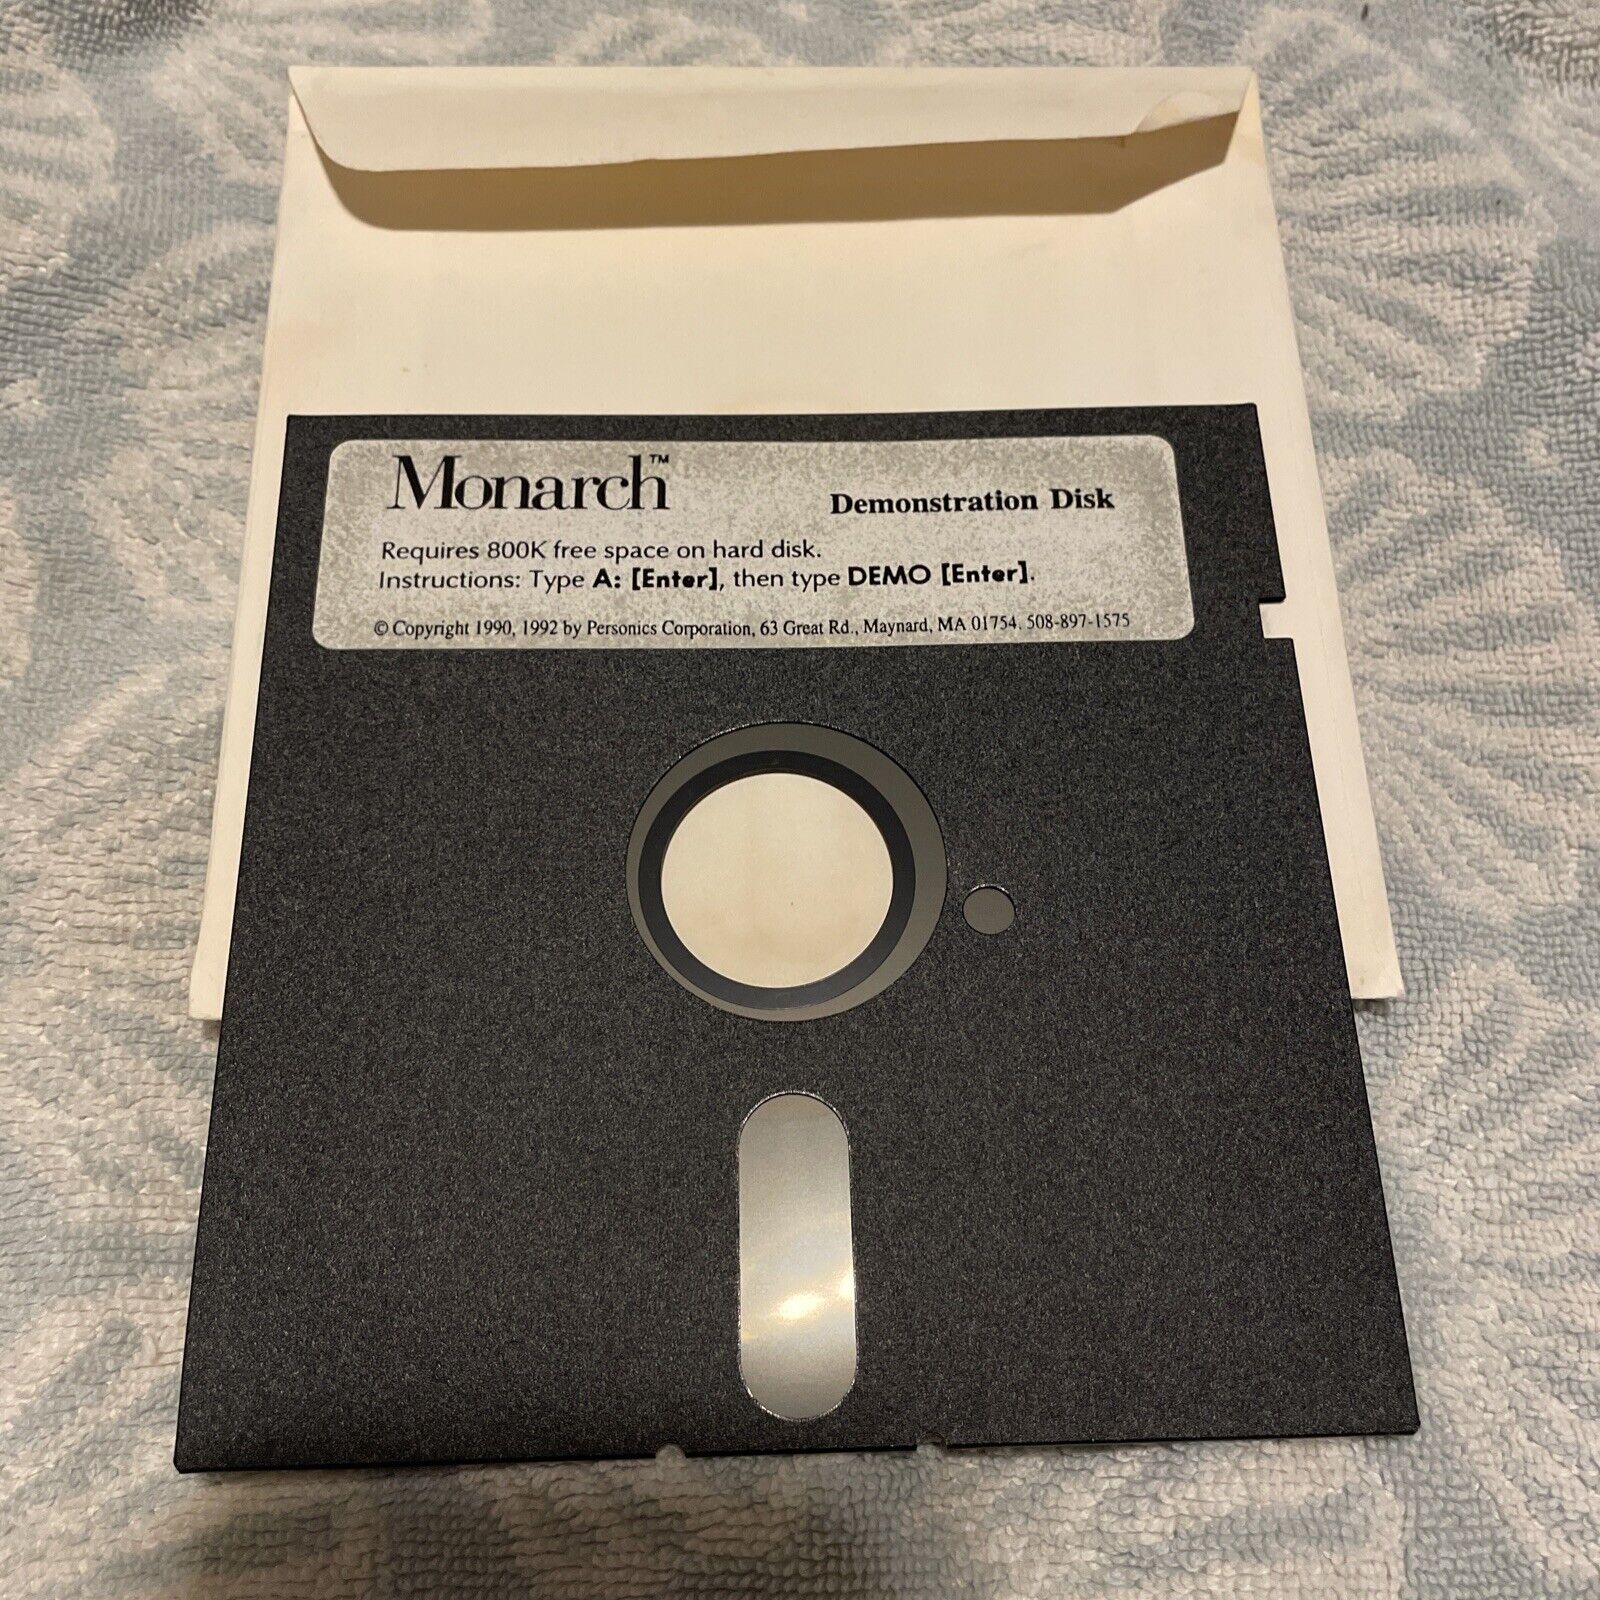 Vintage Monarch 5.25” Demo Floppy Disk 1990 Personics Corporation 